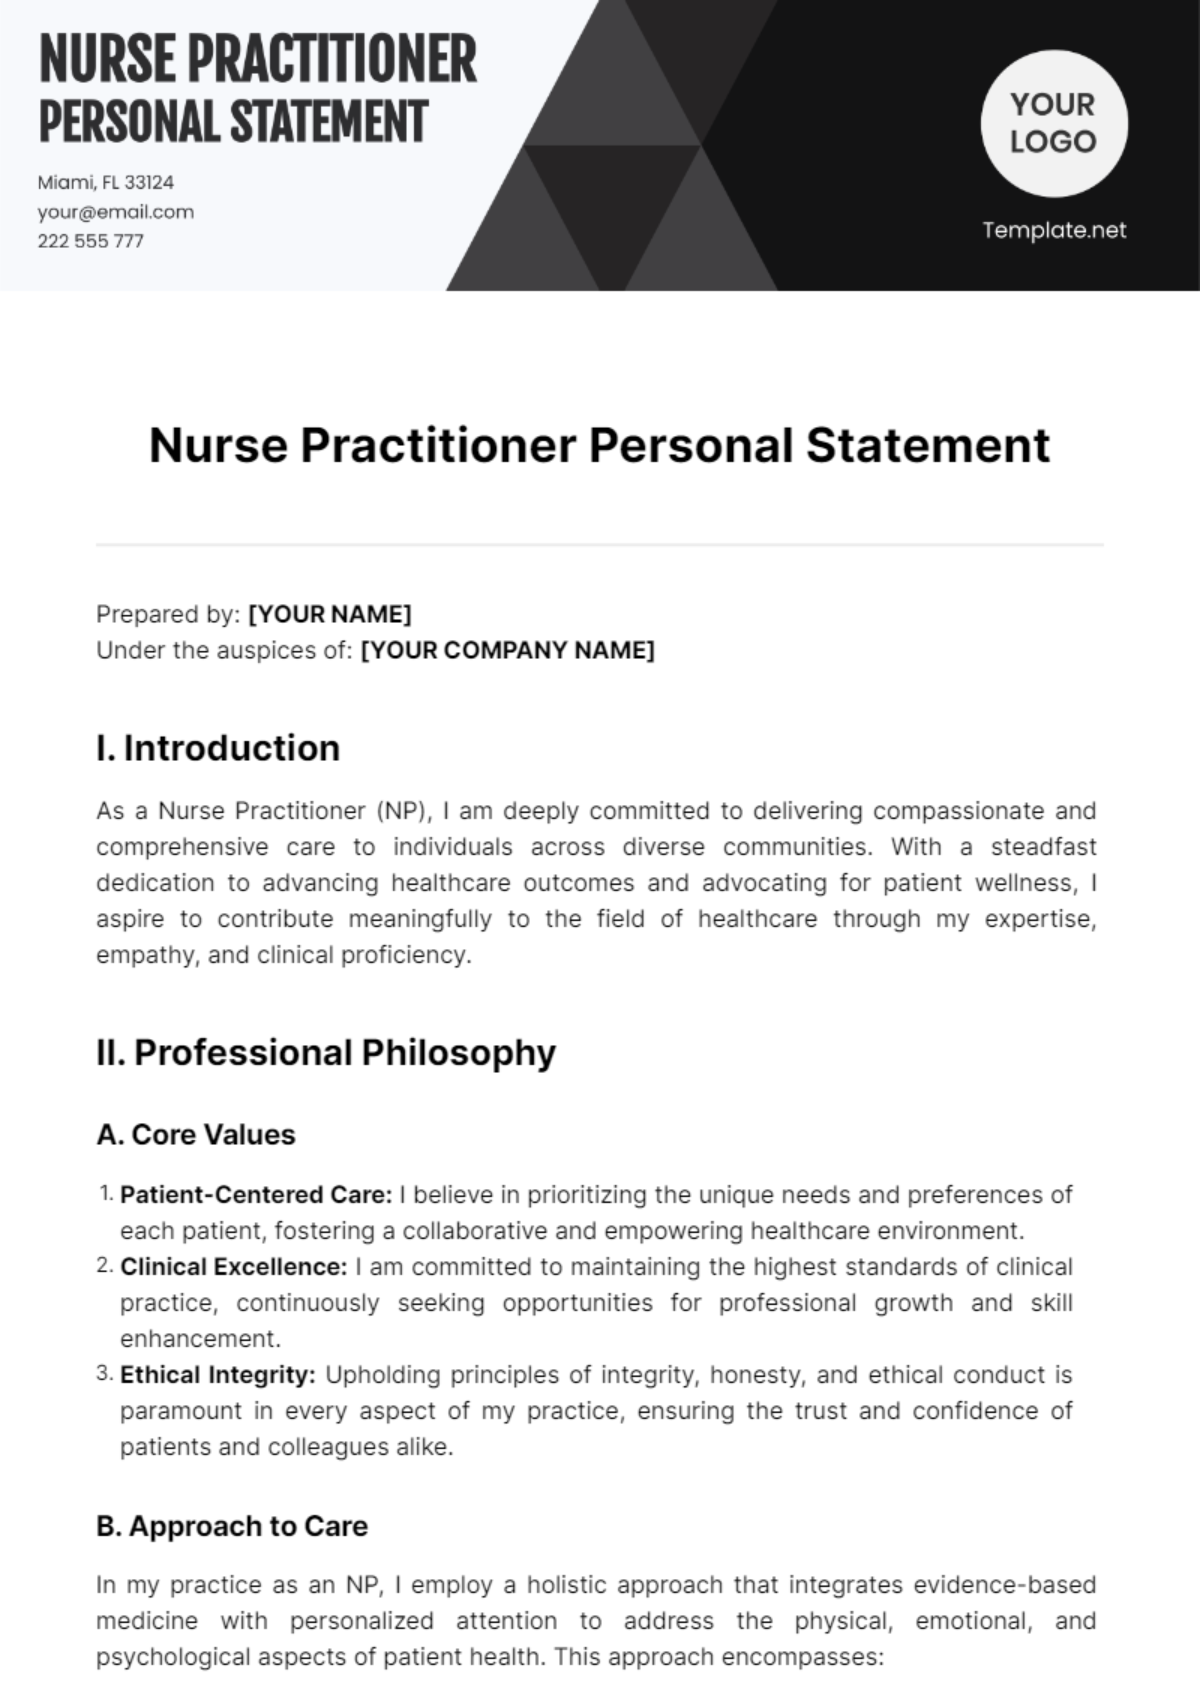 Nurse Practitioner Personal Statement Template